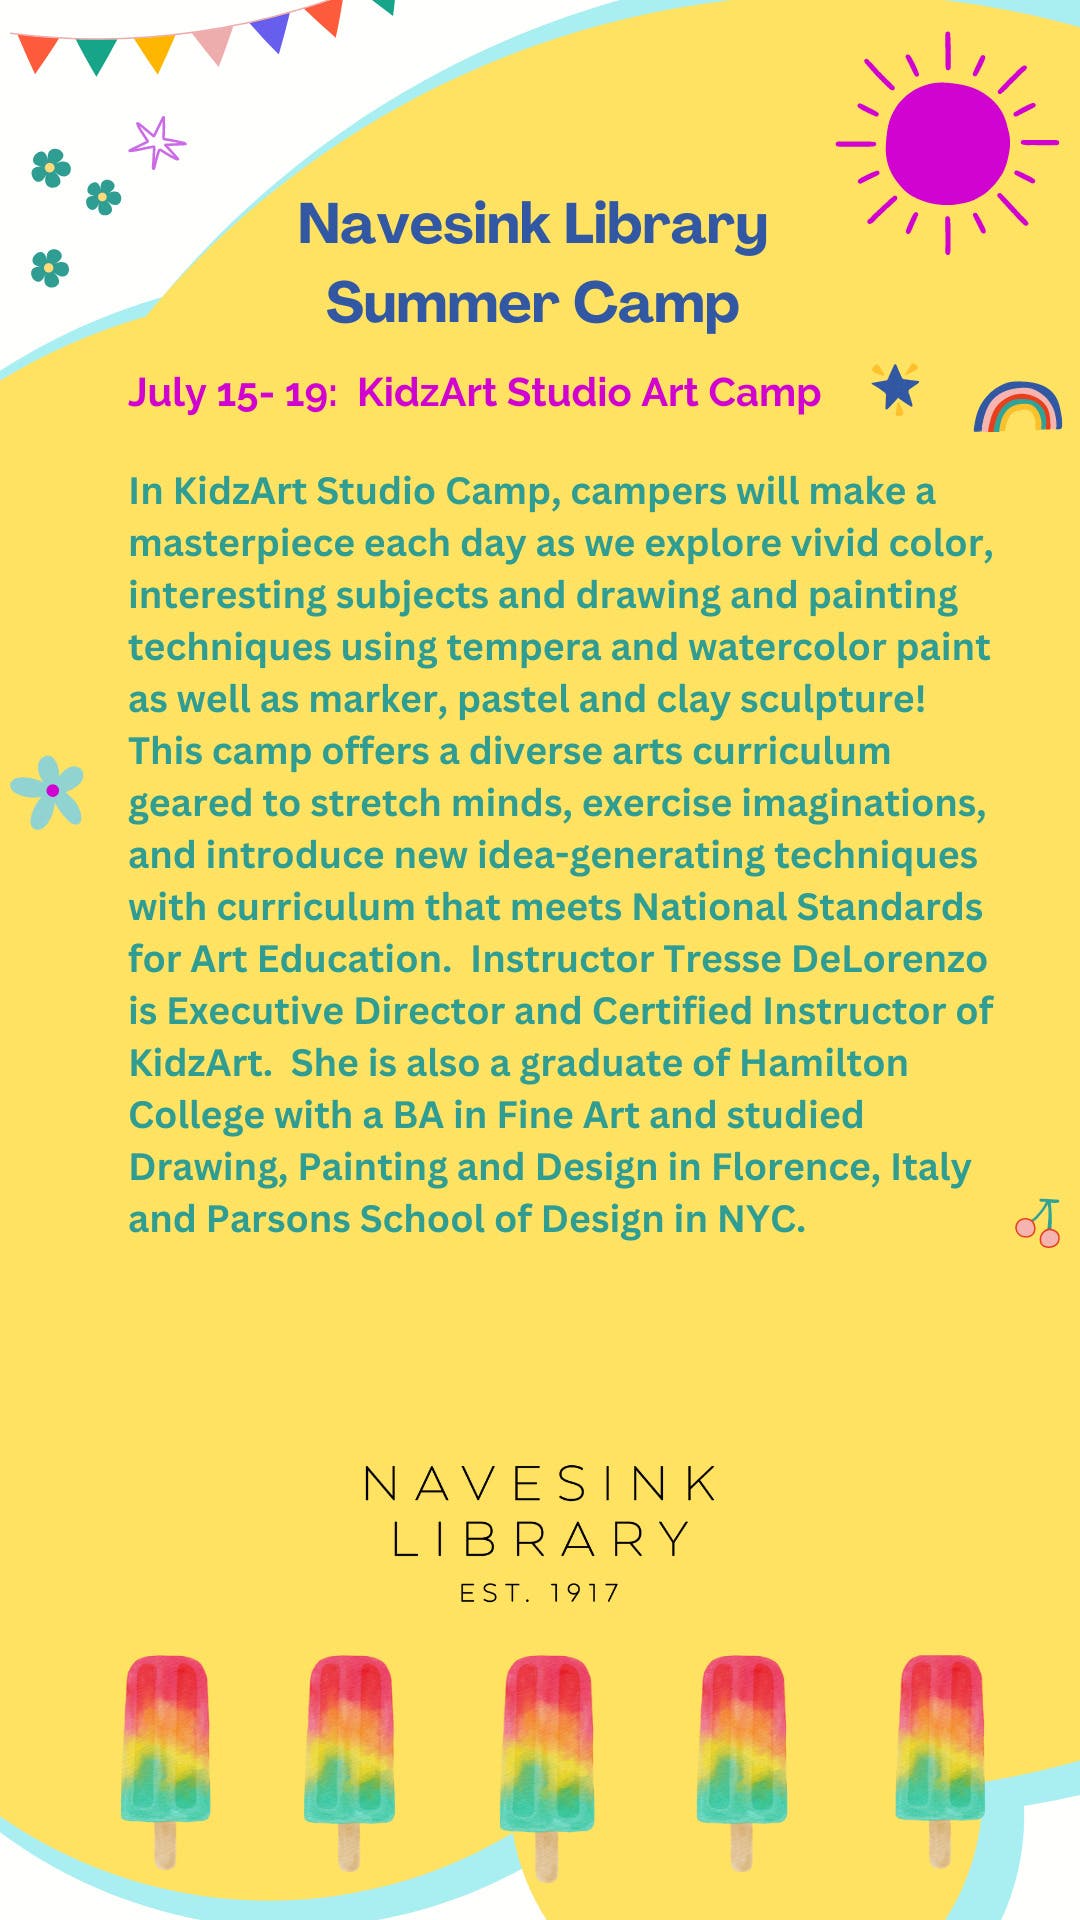 Navesink Library Summer Camp - KidzArt Studio Art Camp